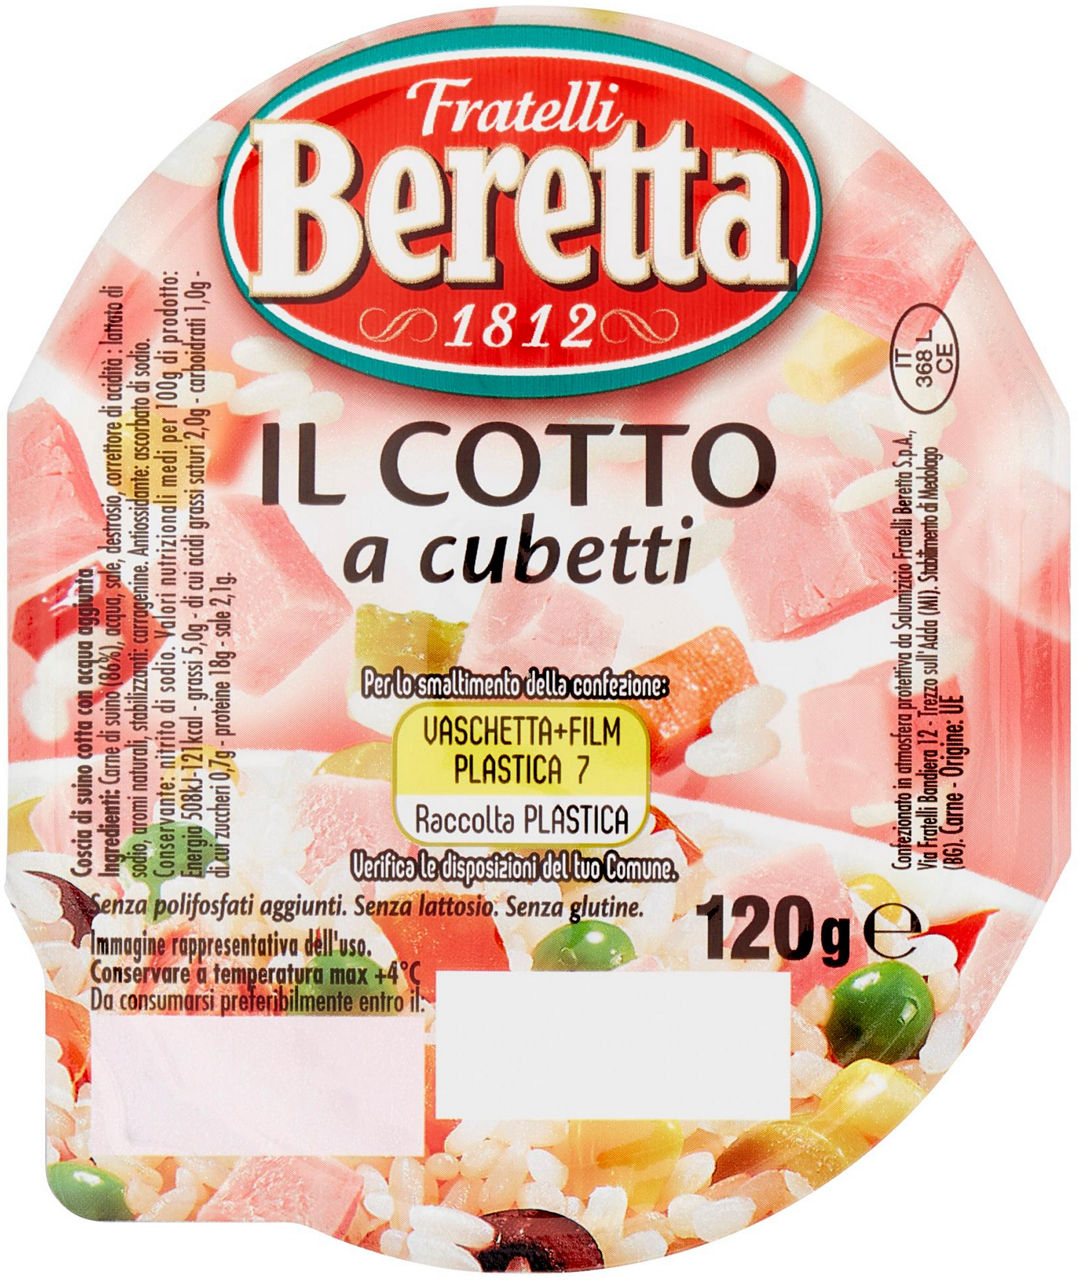 COTTO CUBETTI BERETTA VASCHETTA G120 - 0